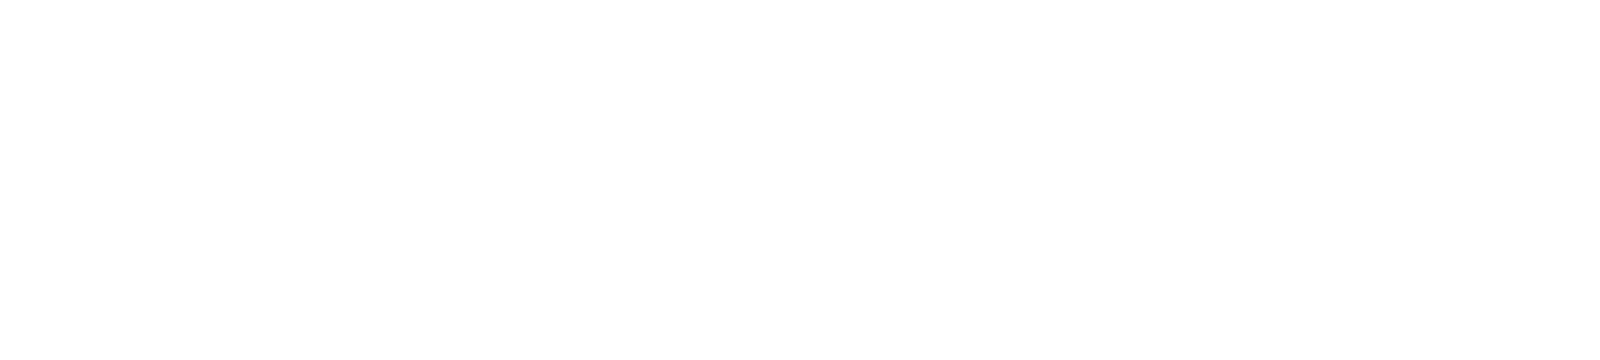 default nmc health logo for question pro_large